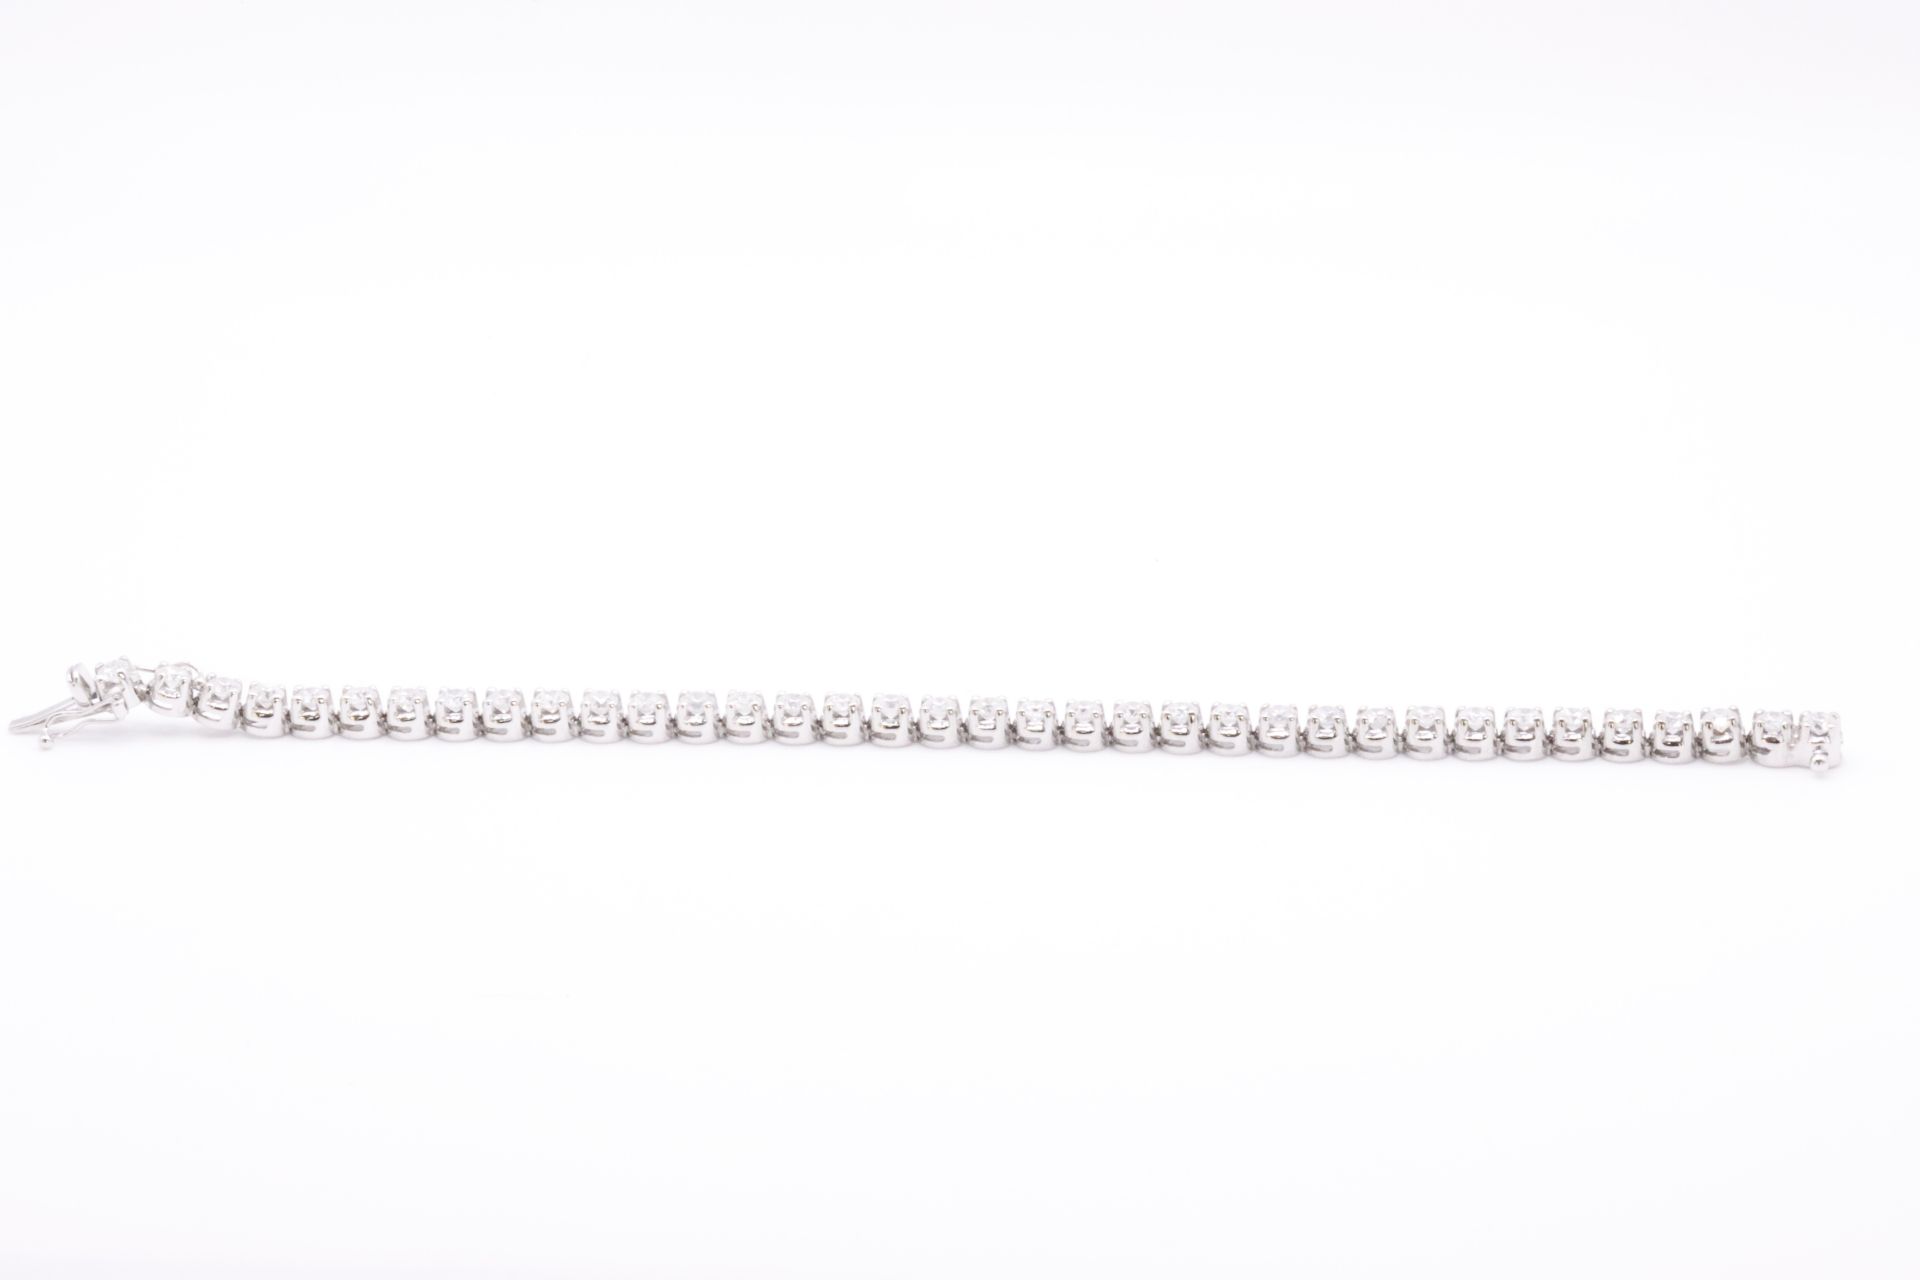 ** ON SALE **7.0 Carat 18ct White Gold Tennis Bracelet set with Round Brilliant Cut Natural Diamonds - Image 6 of 33